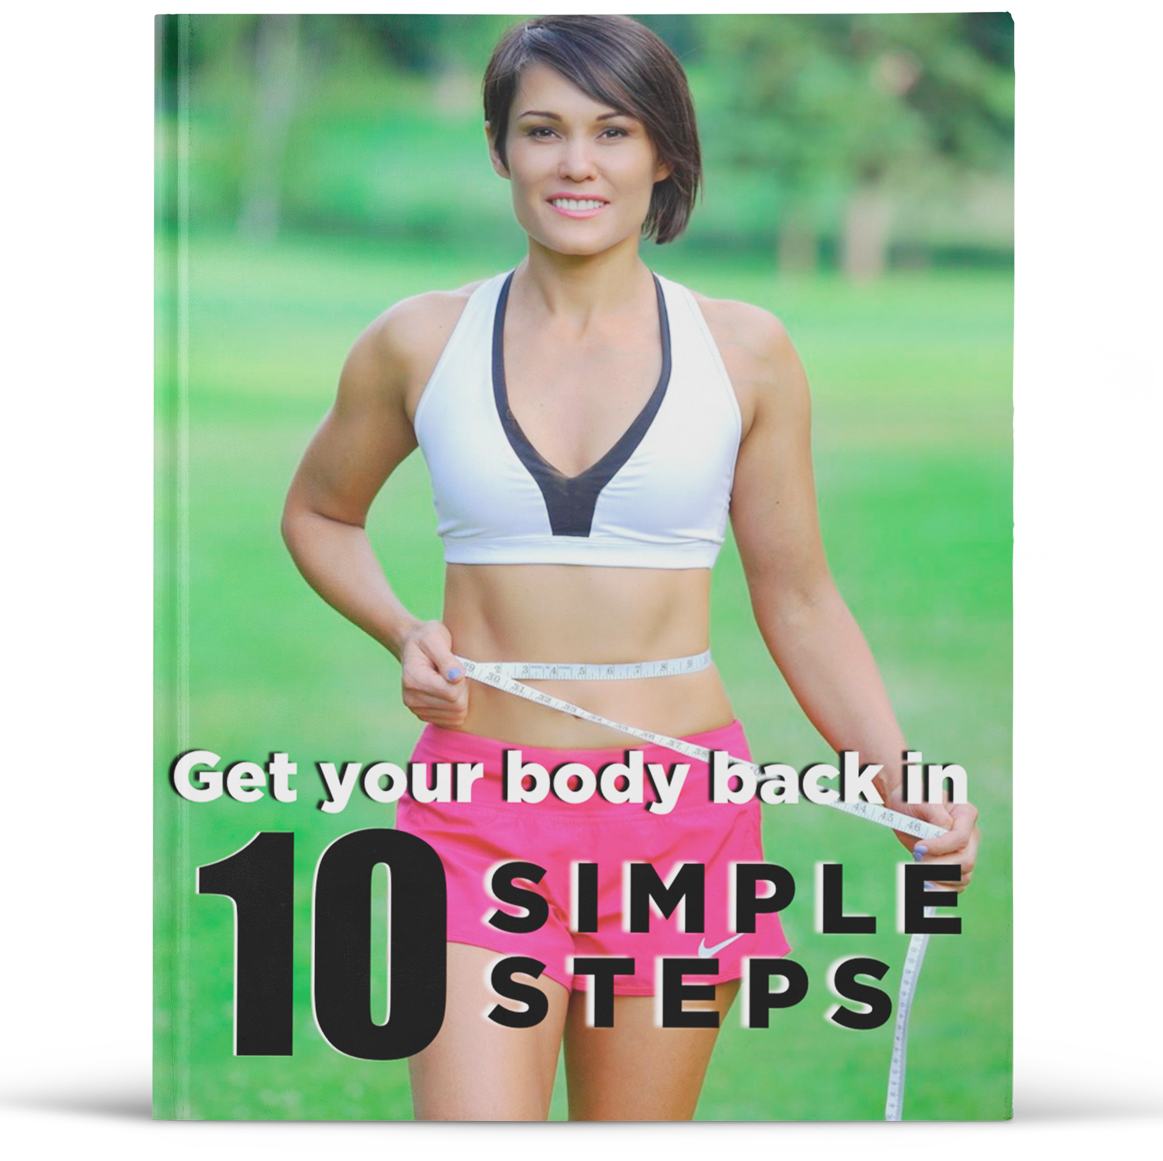 Get yuor body back in 10 simple steps